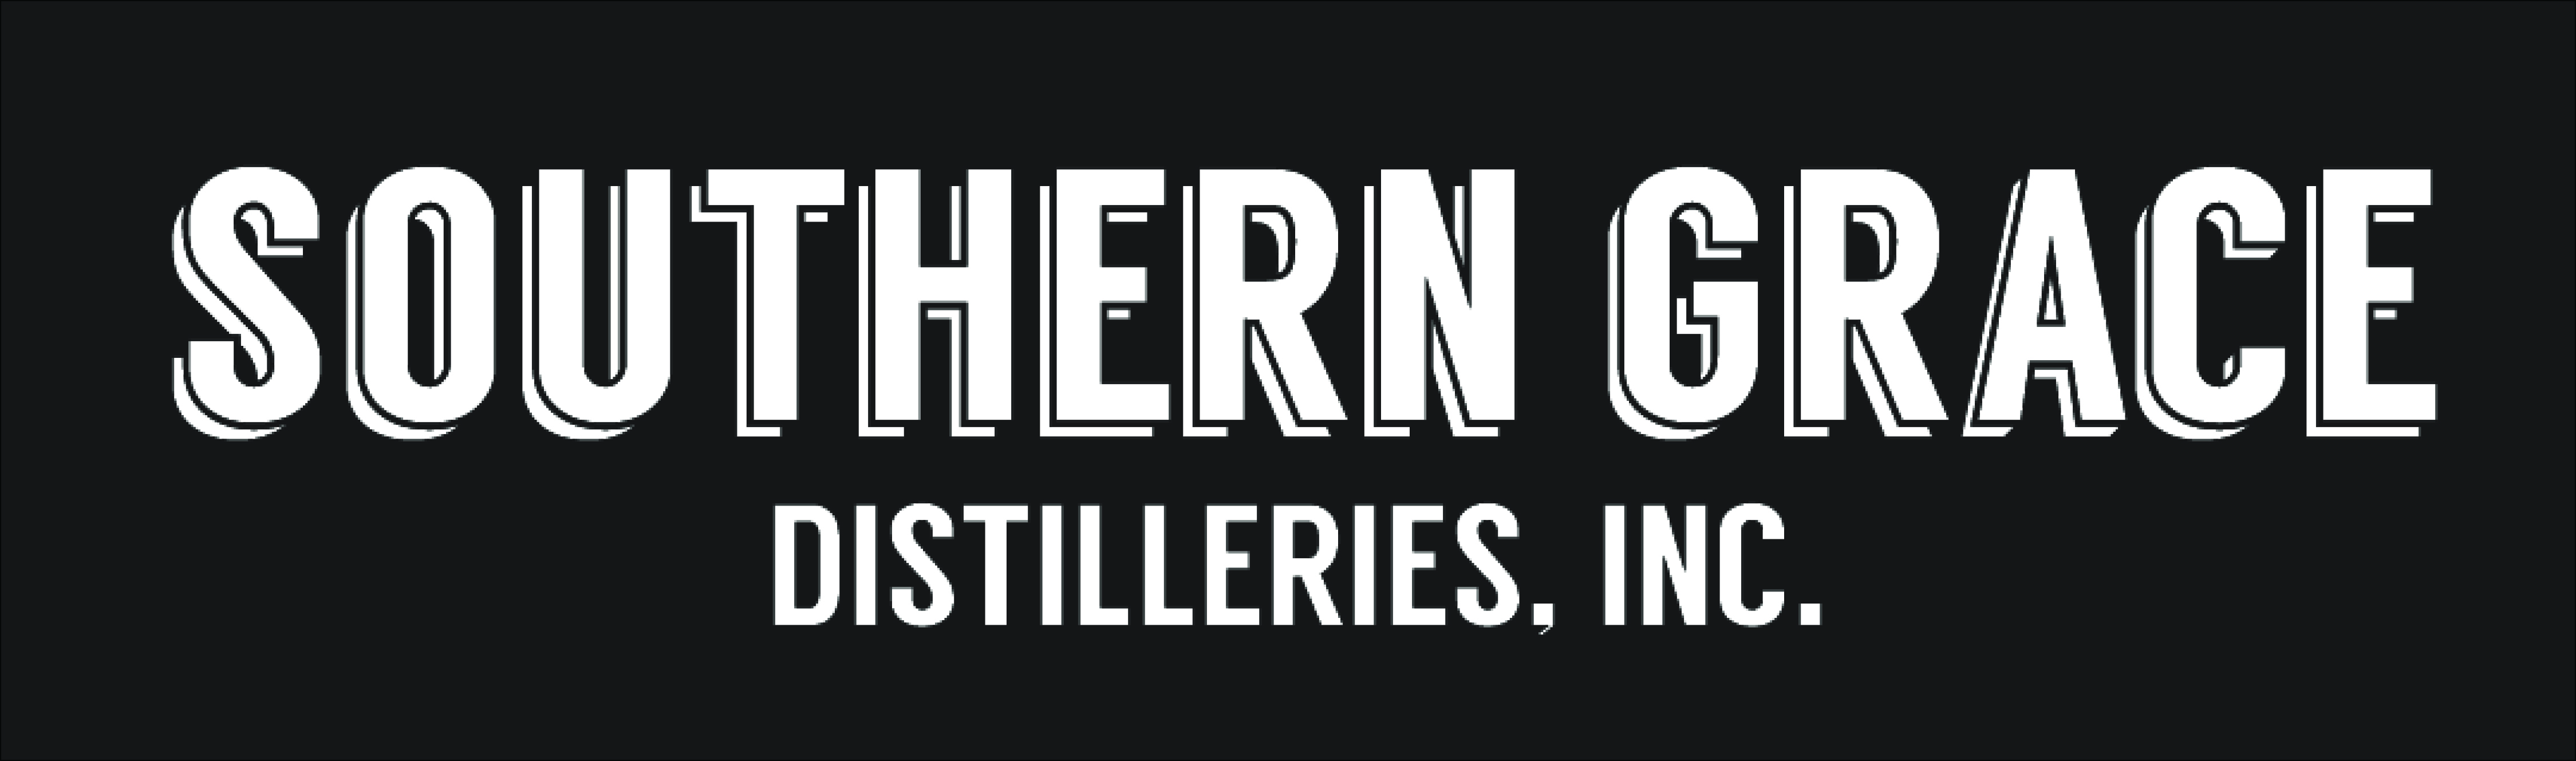 Sponsor Southern Grace Distilleries